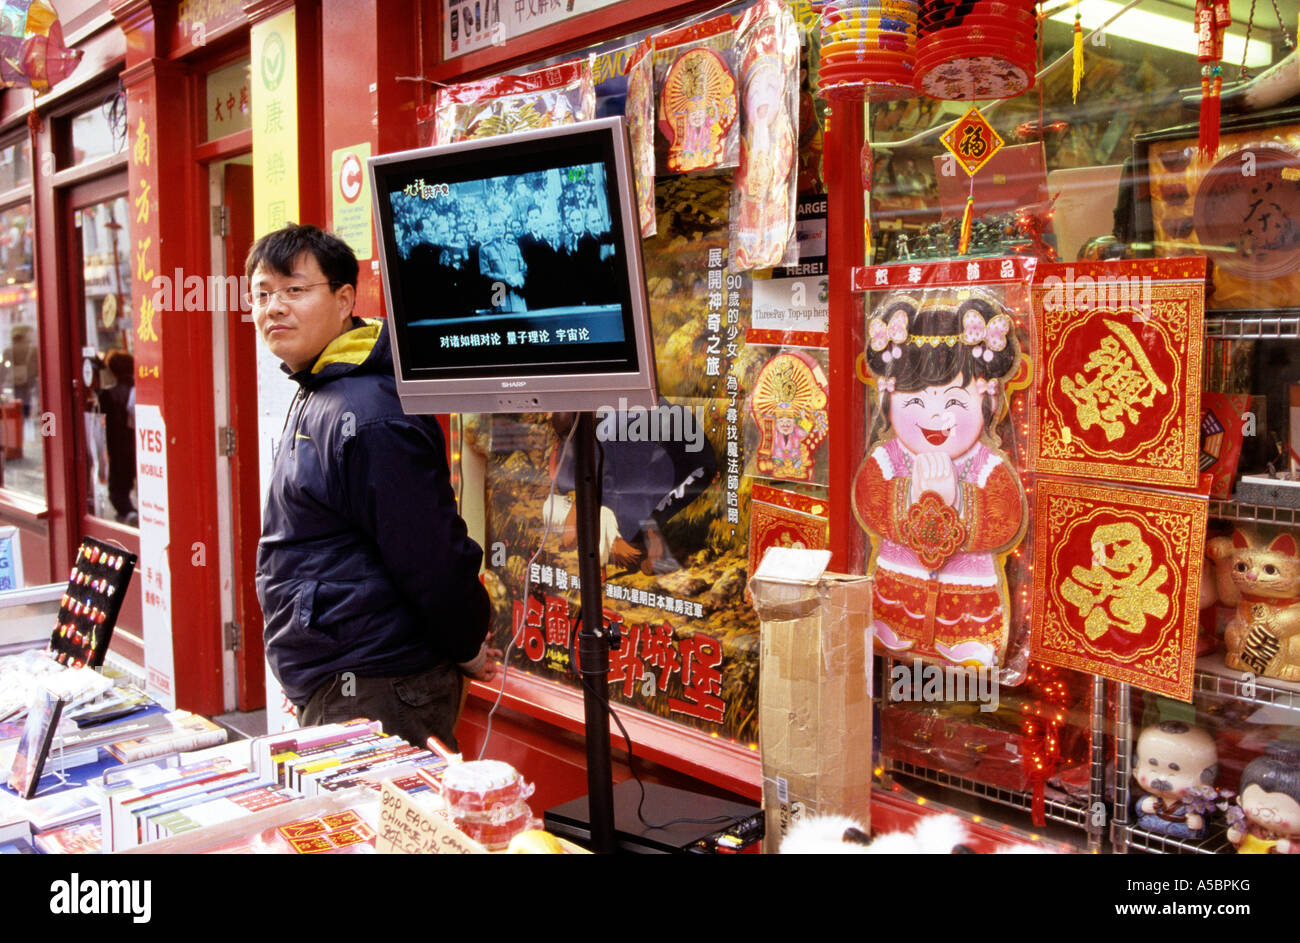 Chinese man manning stall, standing beside flat screen television, Chinatown, London, England, UK Stock Photo